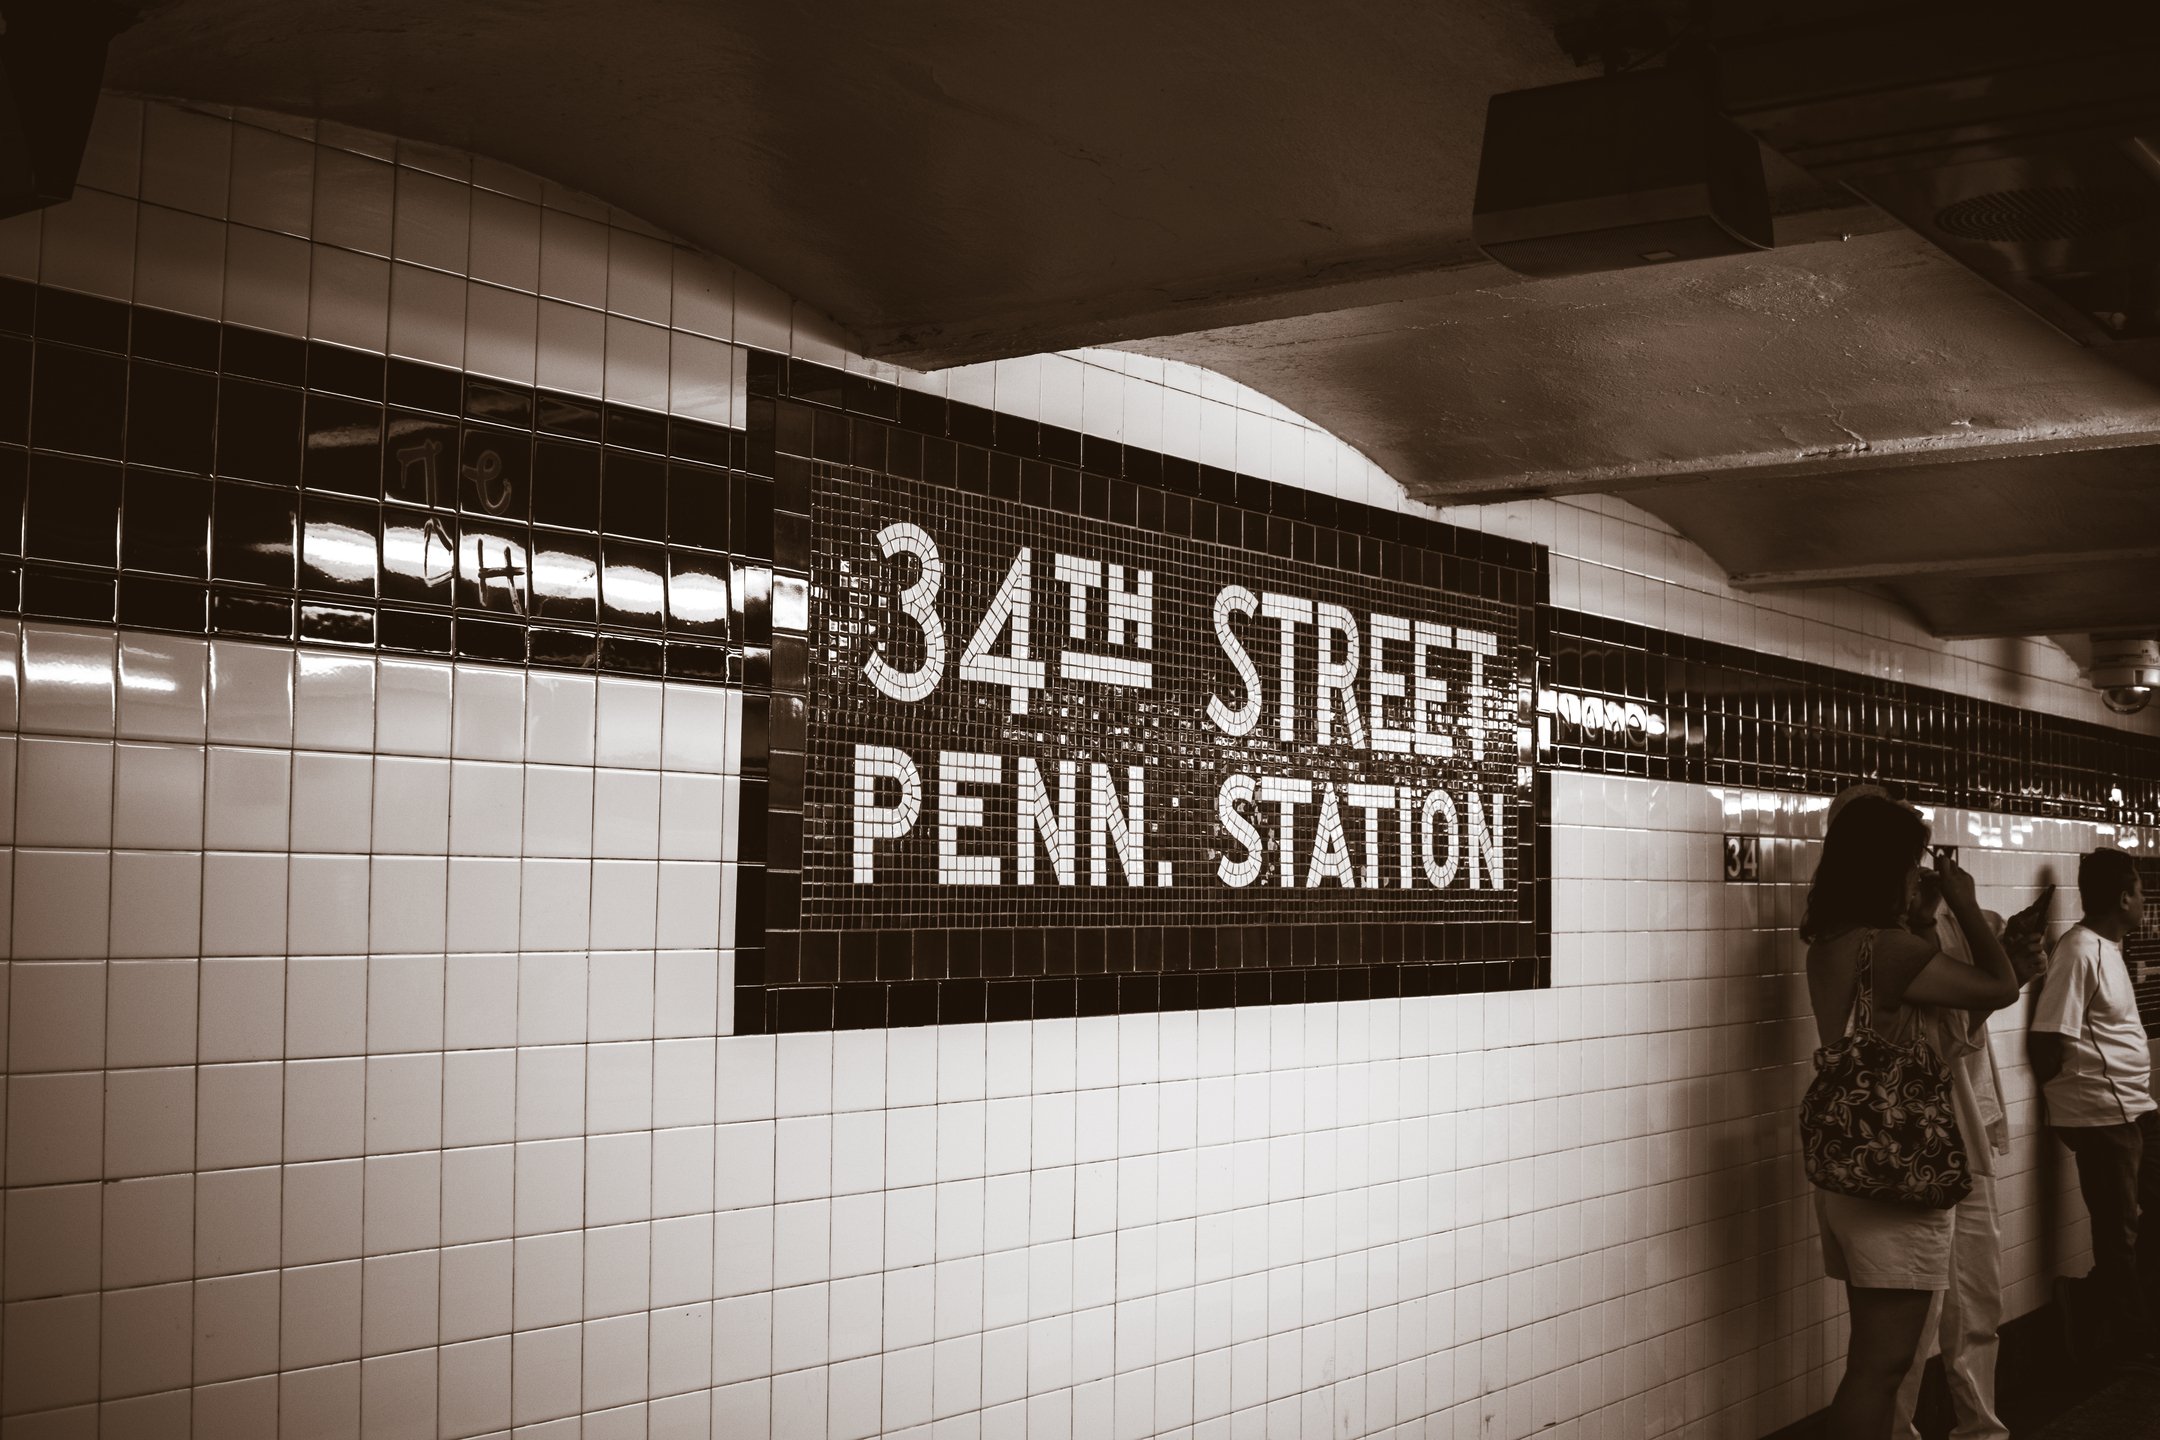 34th Street Penn.  Station sign